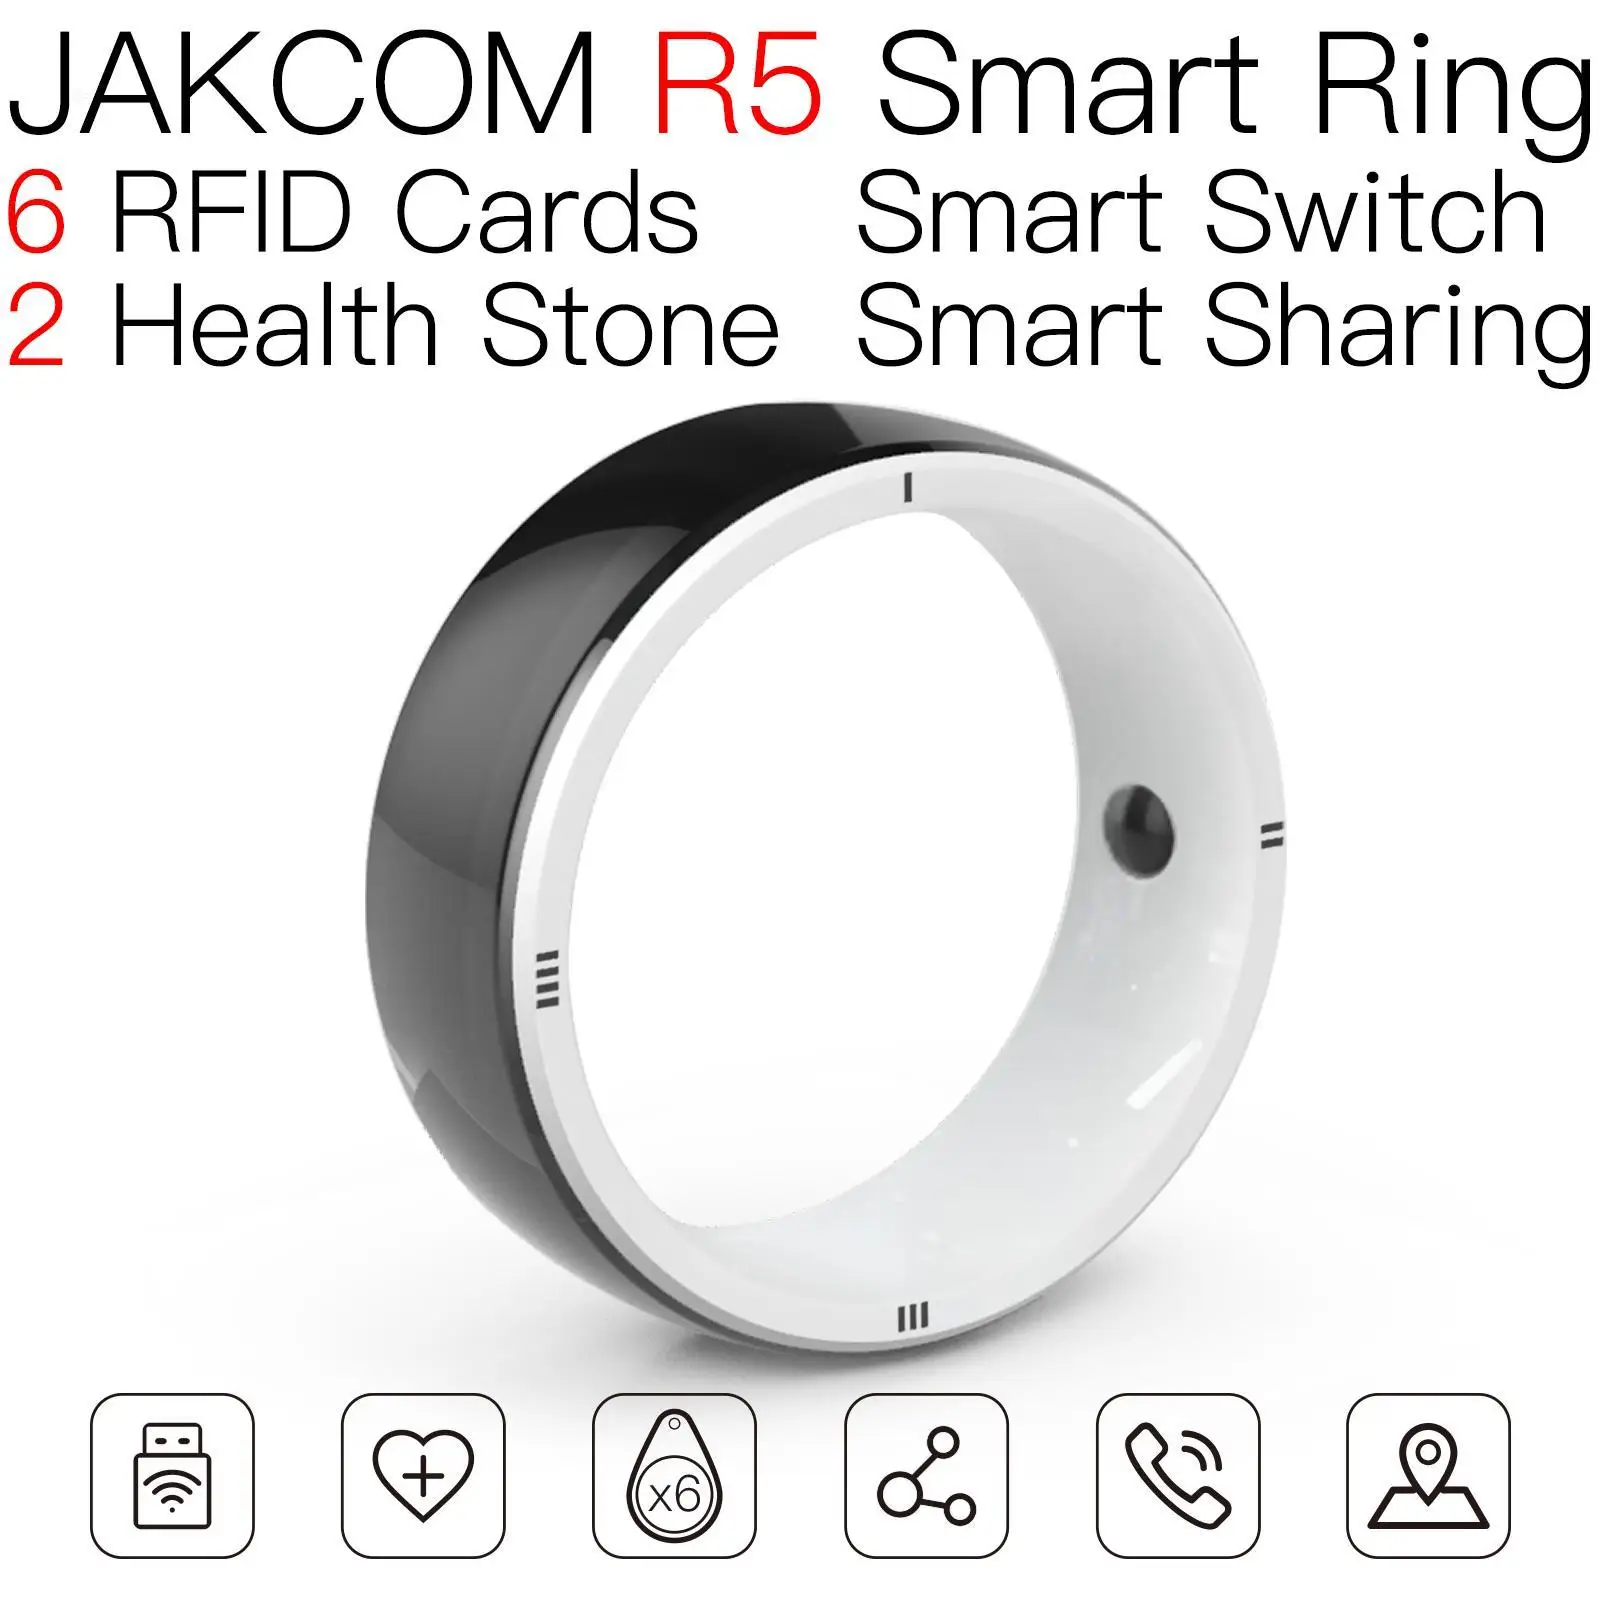 

JAKCOM R5 Smart Ring Nice than rfid blocker card antenna hf20a 13 56 mhz tags copy dogs id tag ball ntag nfc soldier em 125 khz